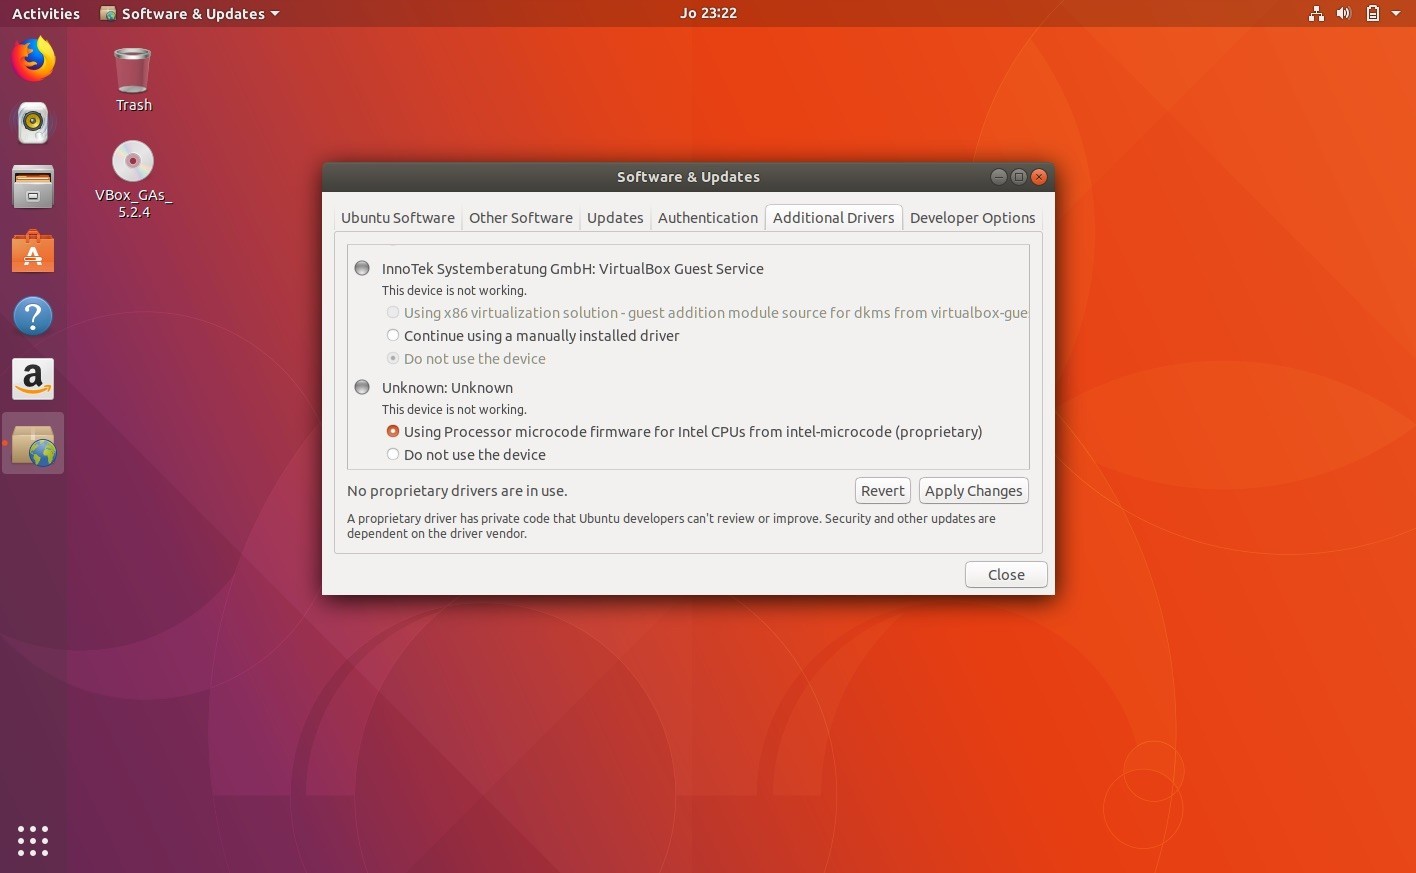 intel-s-microcode-update-for-spectre-makes-a-comeback-in-ubuntu-s-repositories-520489-2.jpg